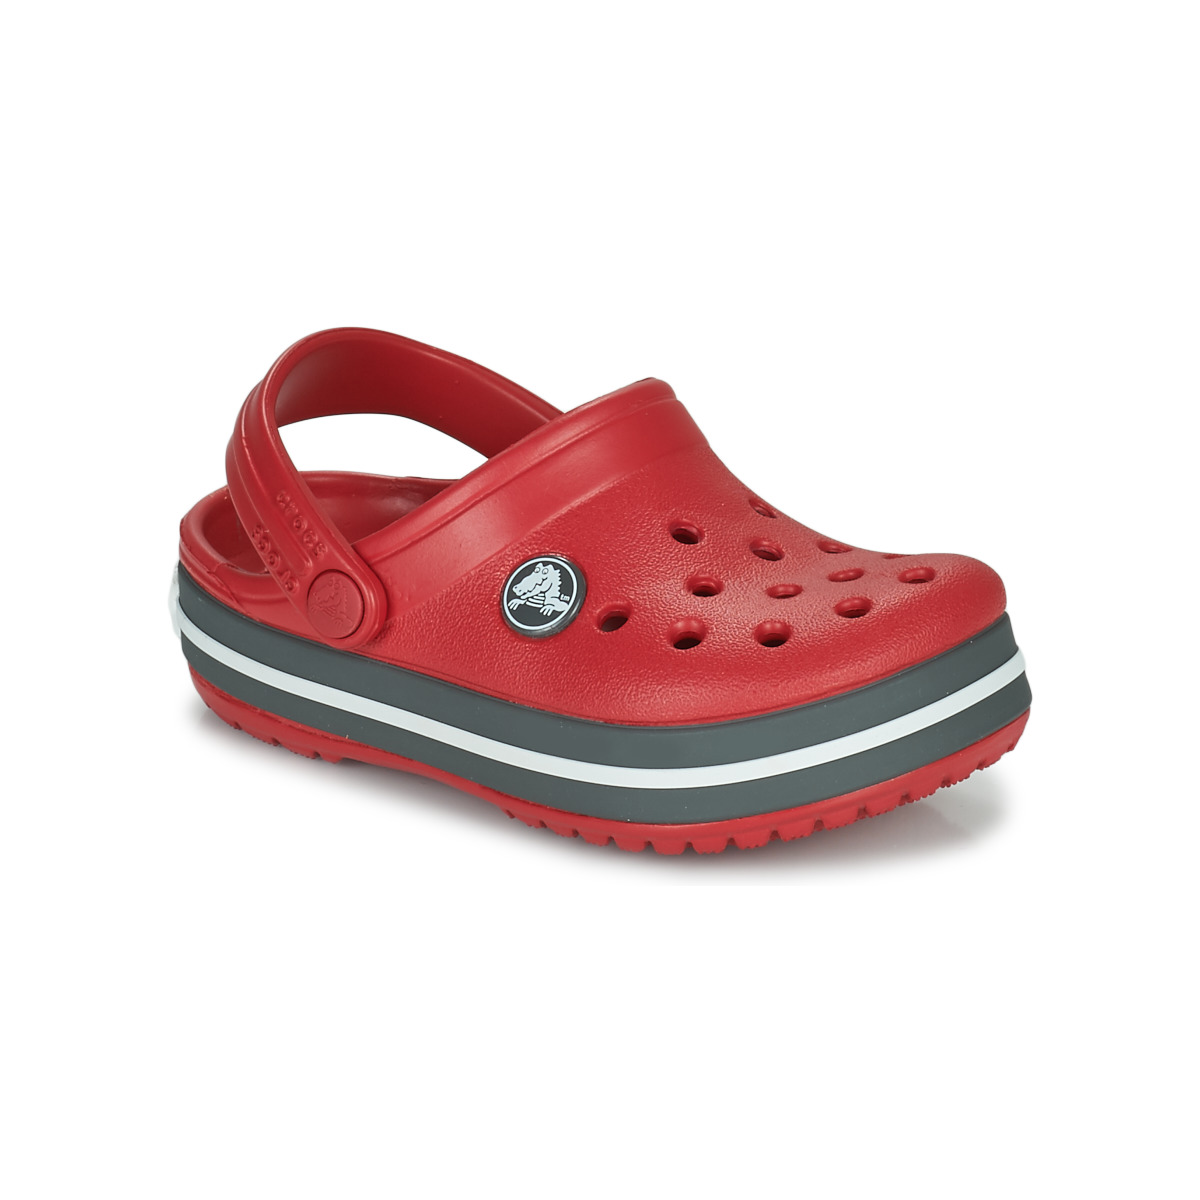 Shoes Children Clogs Crocs CROCBAND CLOG T Red